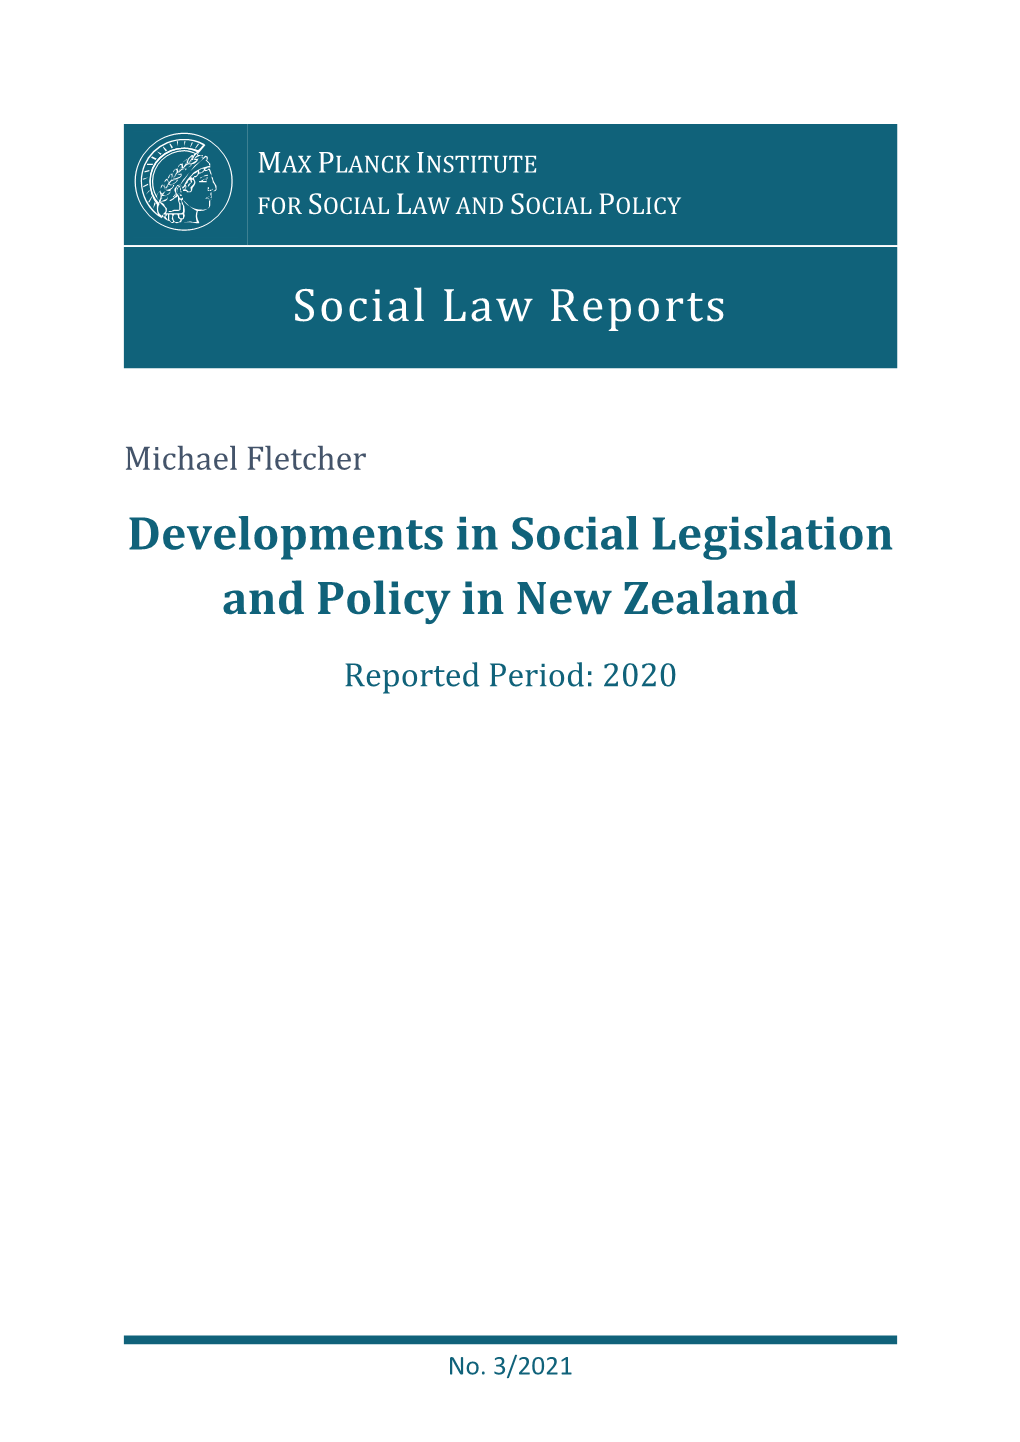 Social Law Reports No. 3/2021 (PDF)